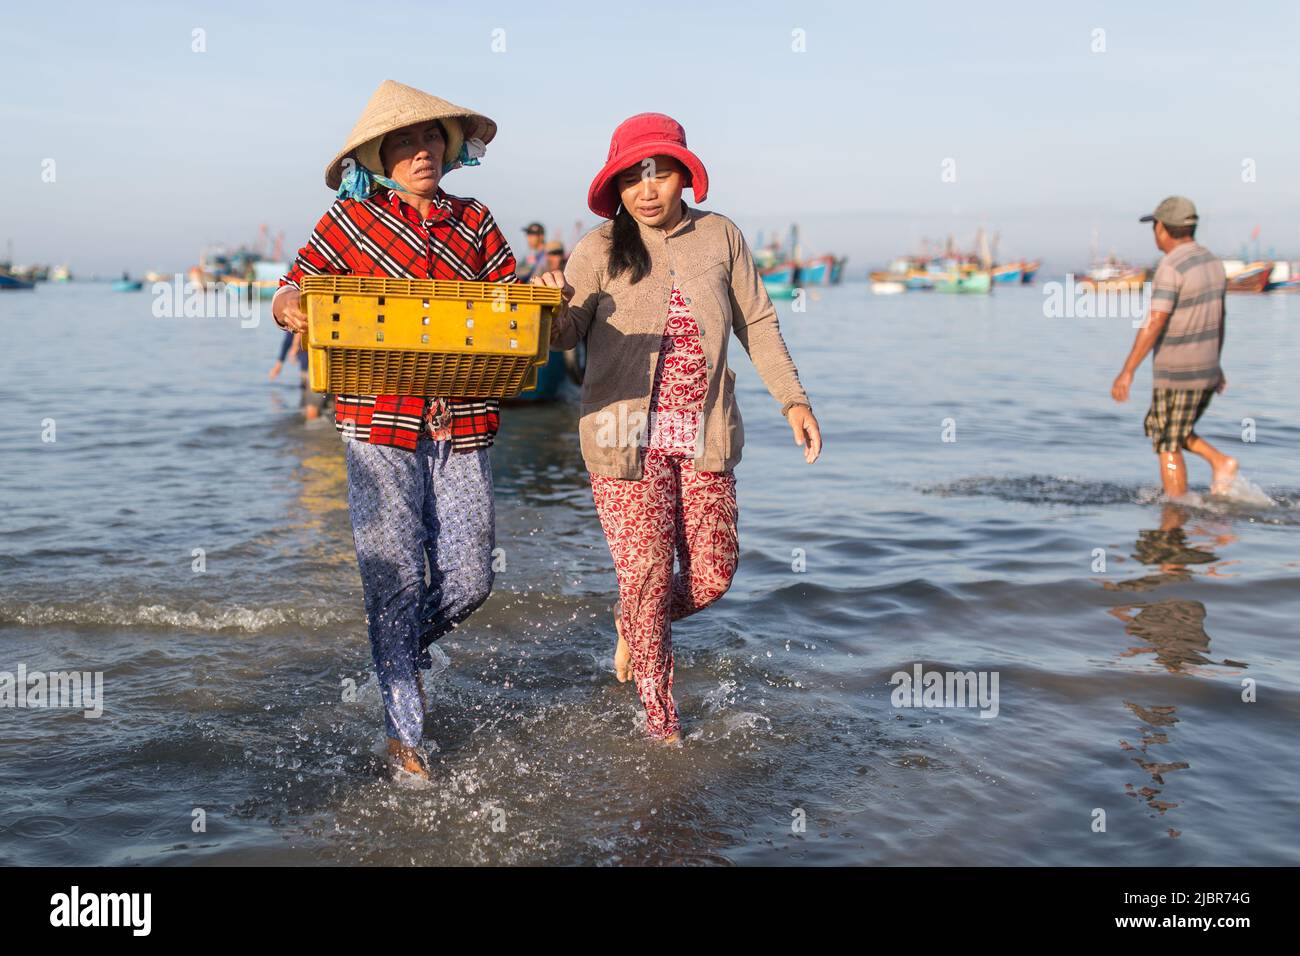 MUI NE, VIETNAM - November 9, 2016: Unidentified people unloading fishes in the morning at the beach in Mui Ne on November 9, 2016, Vietnam. Stock Photo